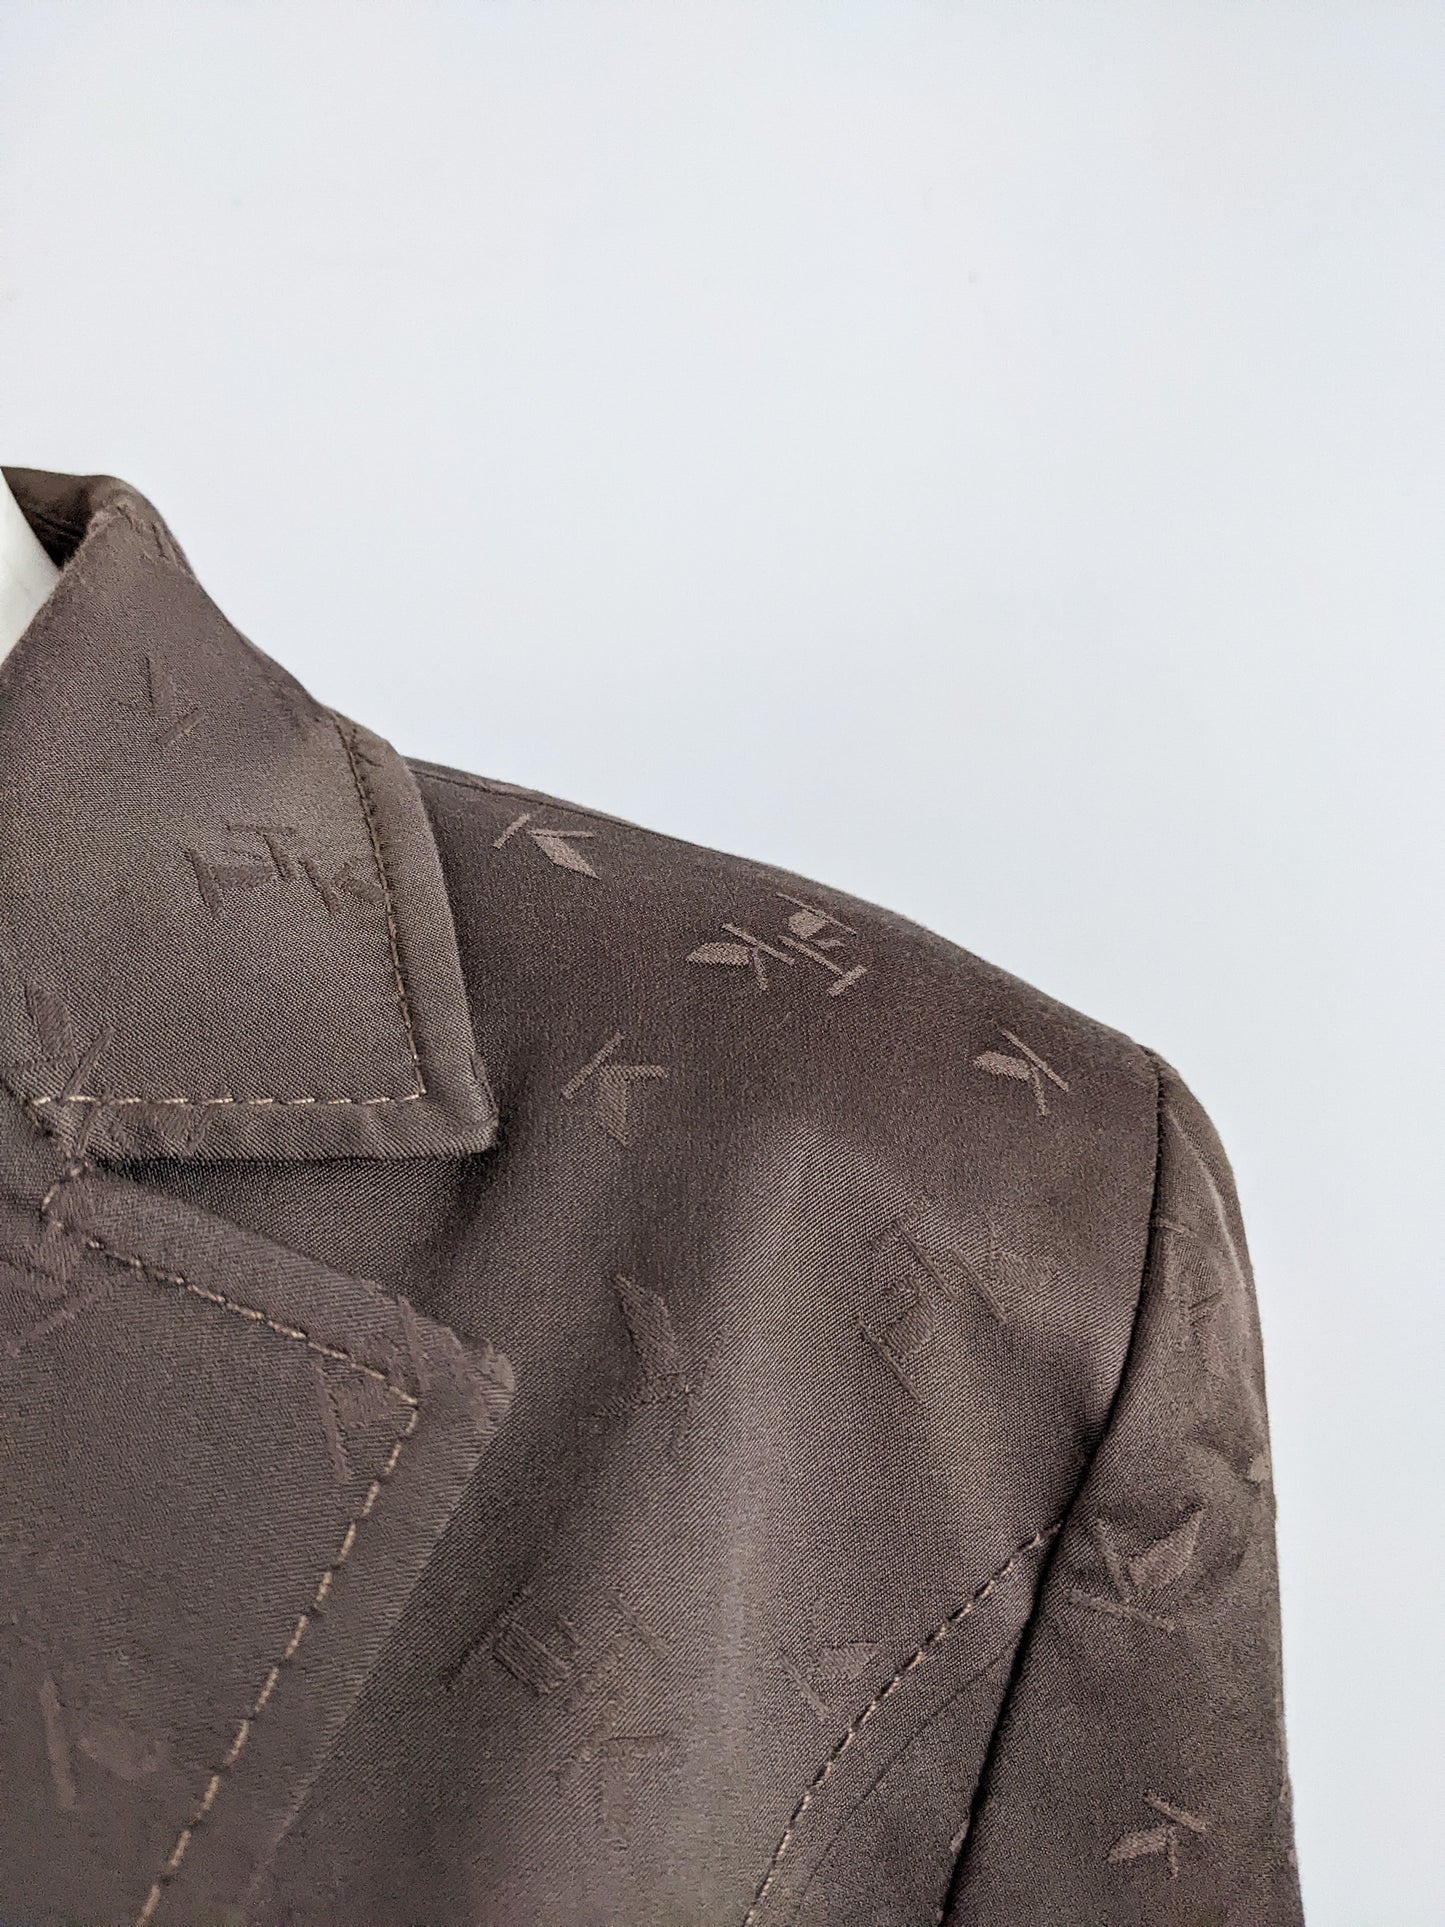 Krizia Vintage Spellout Jacquard Shoulder Padded Blazer Jacket, 1990s